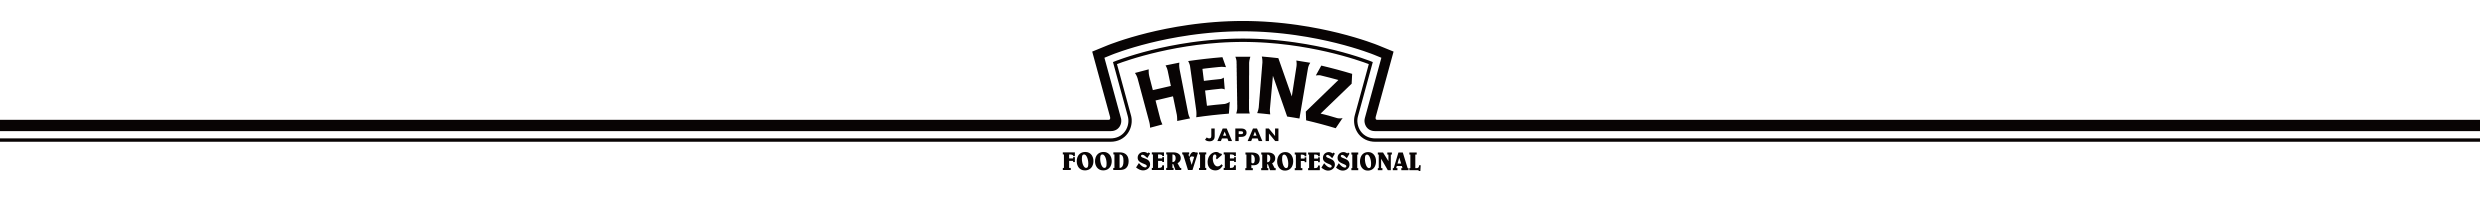 Heinz - ハインツ